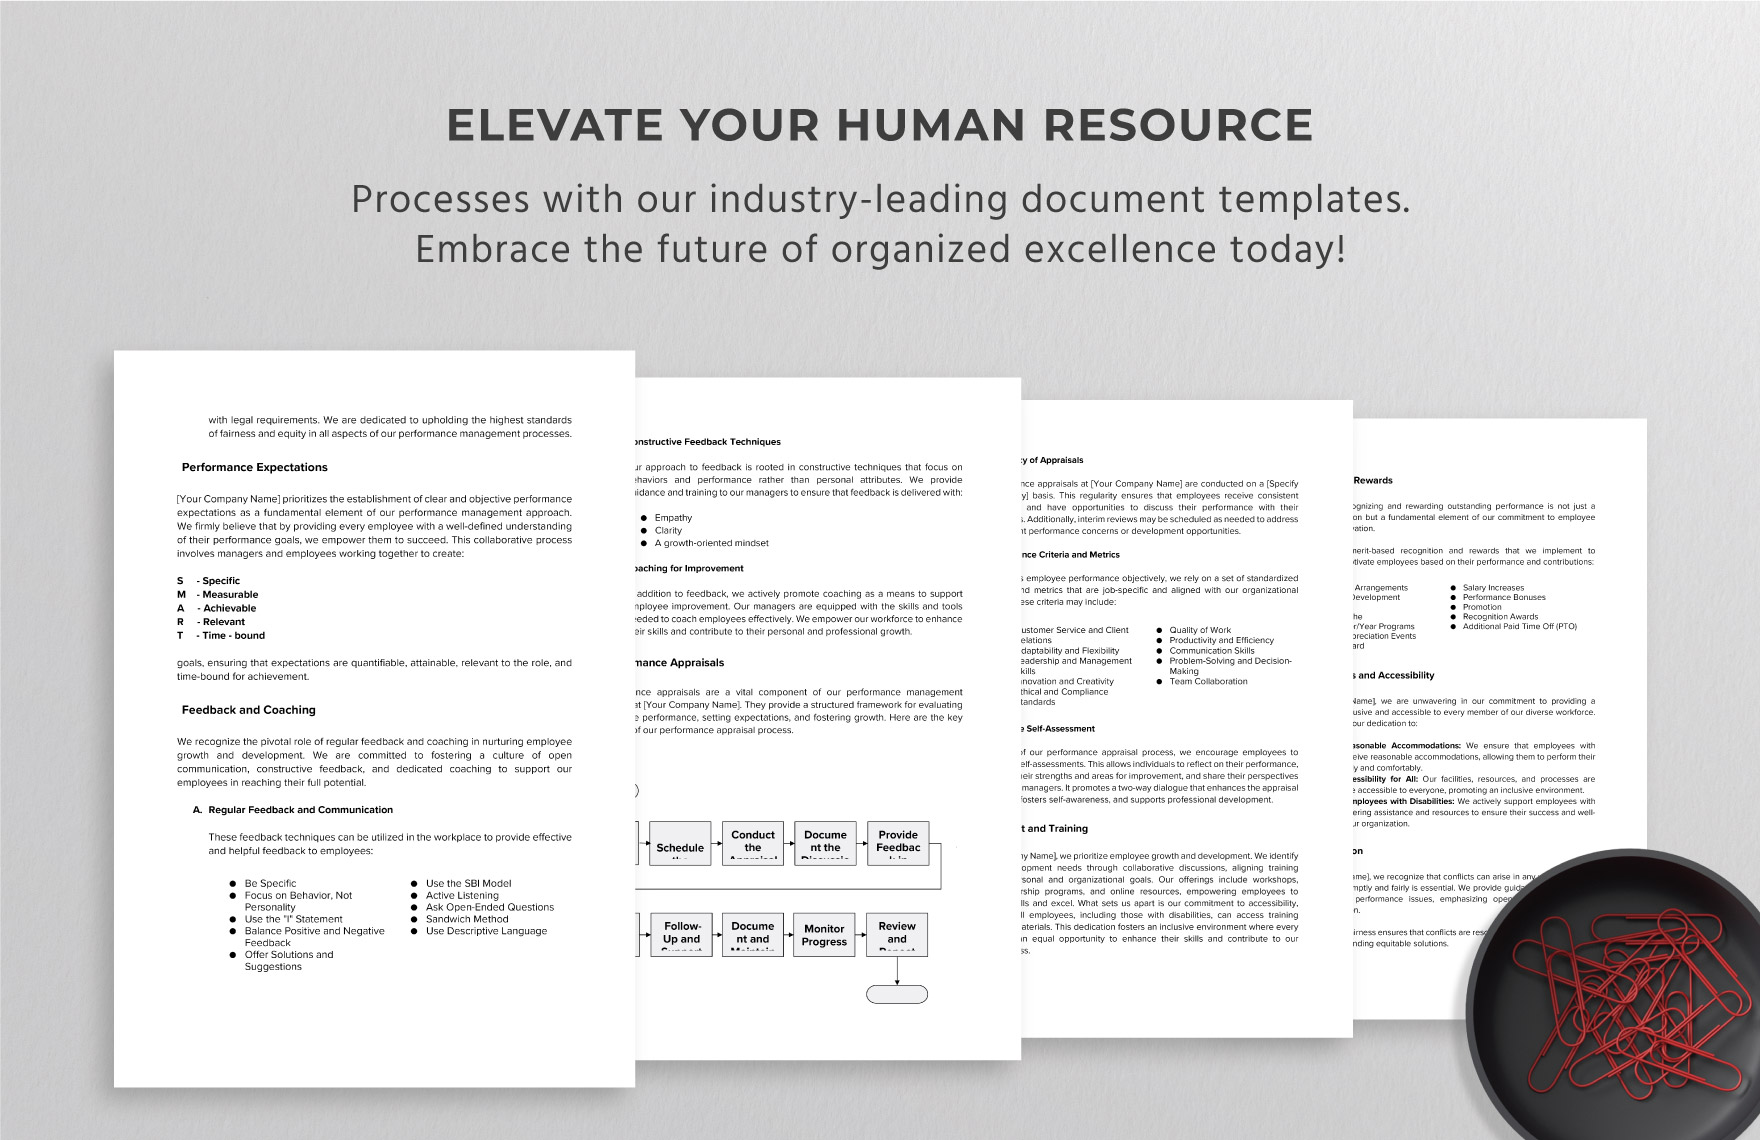 Inclusive Performance Management Handbook HR Template